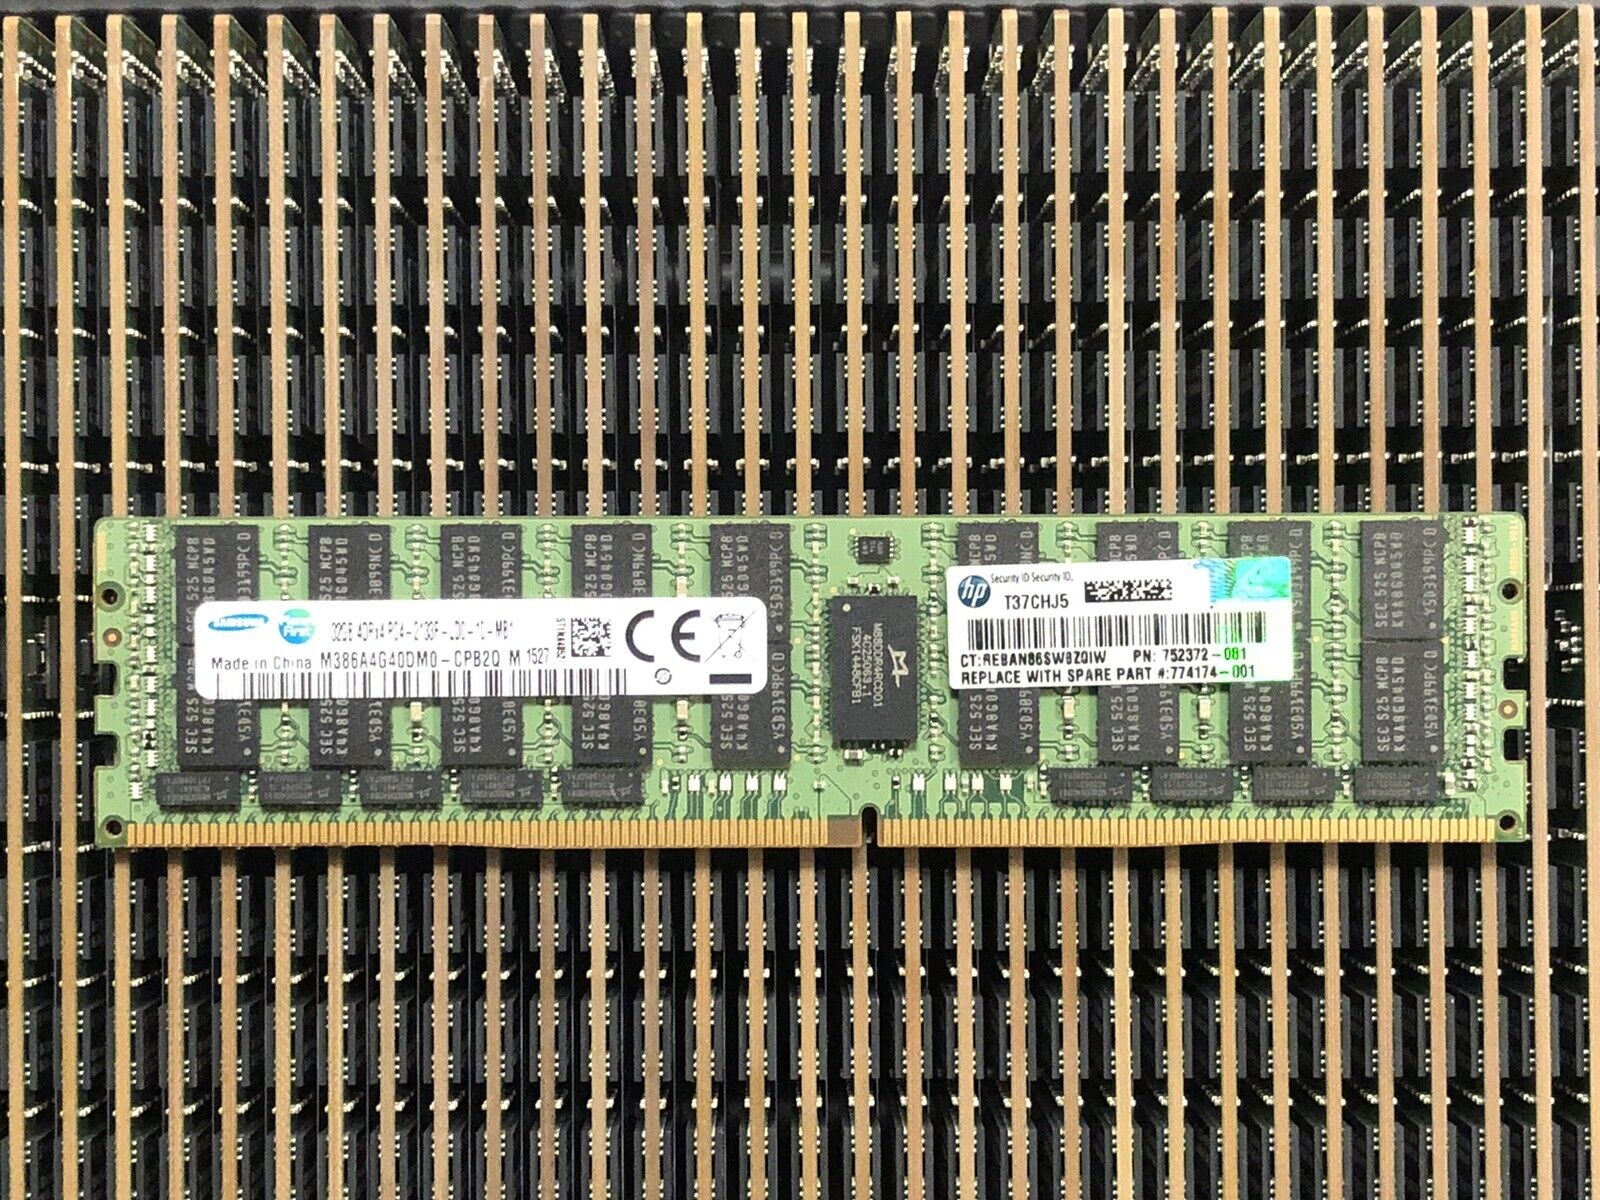  HP HPE 32GB DDR4 PC4-17000P-L 2133MHz 4DRx4 LRDIMM Server Memory RAM 4Rx4 2133P